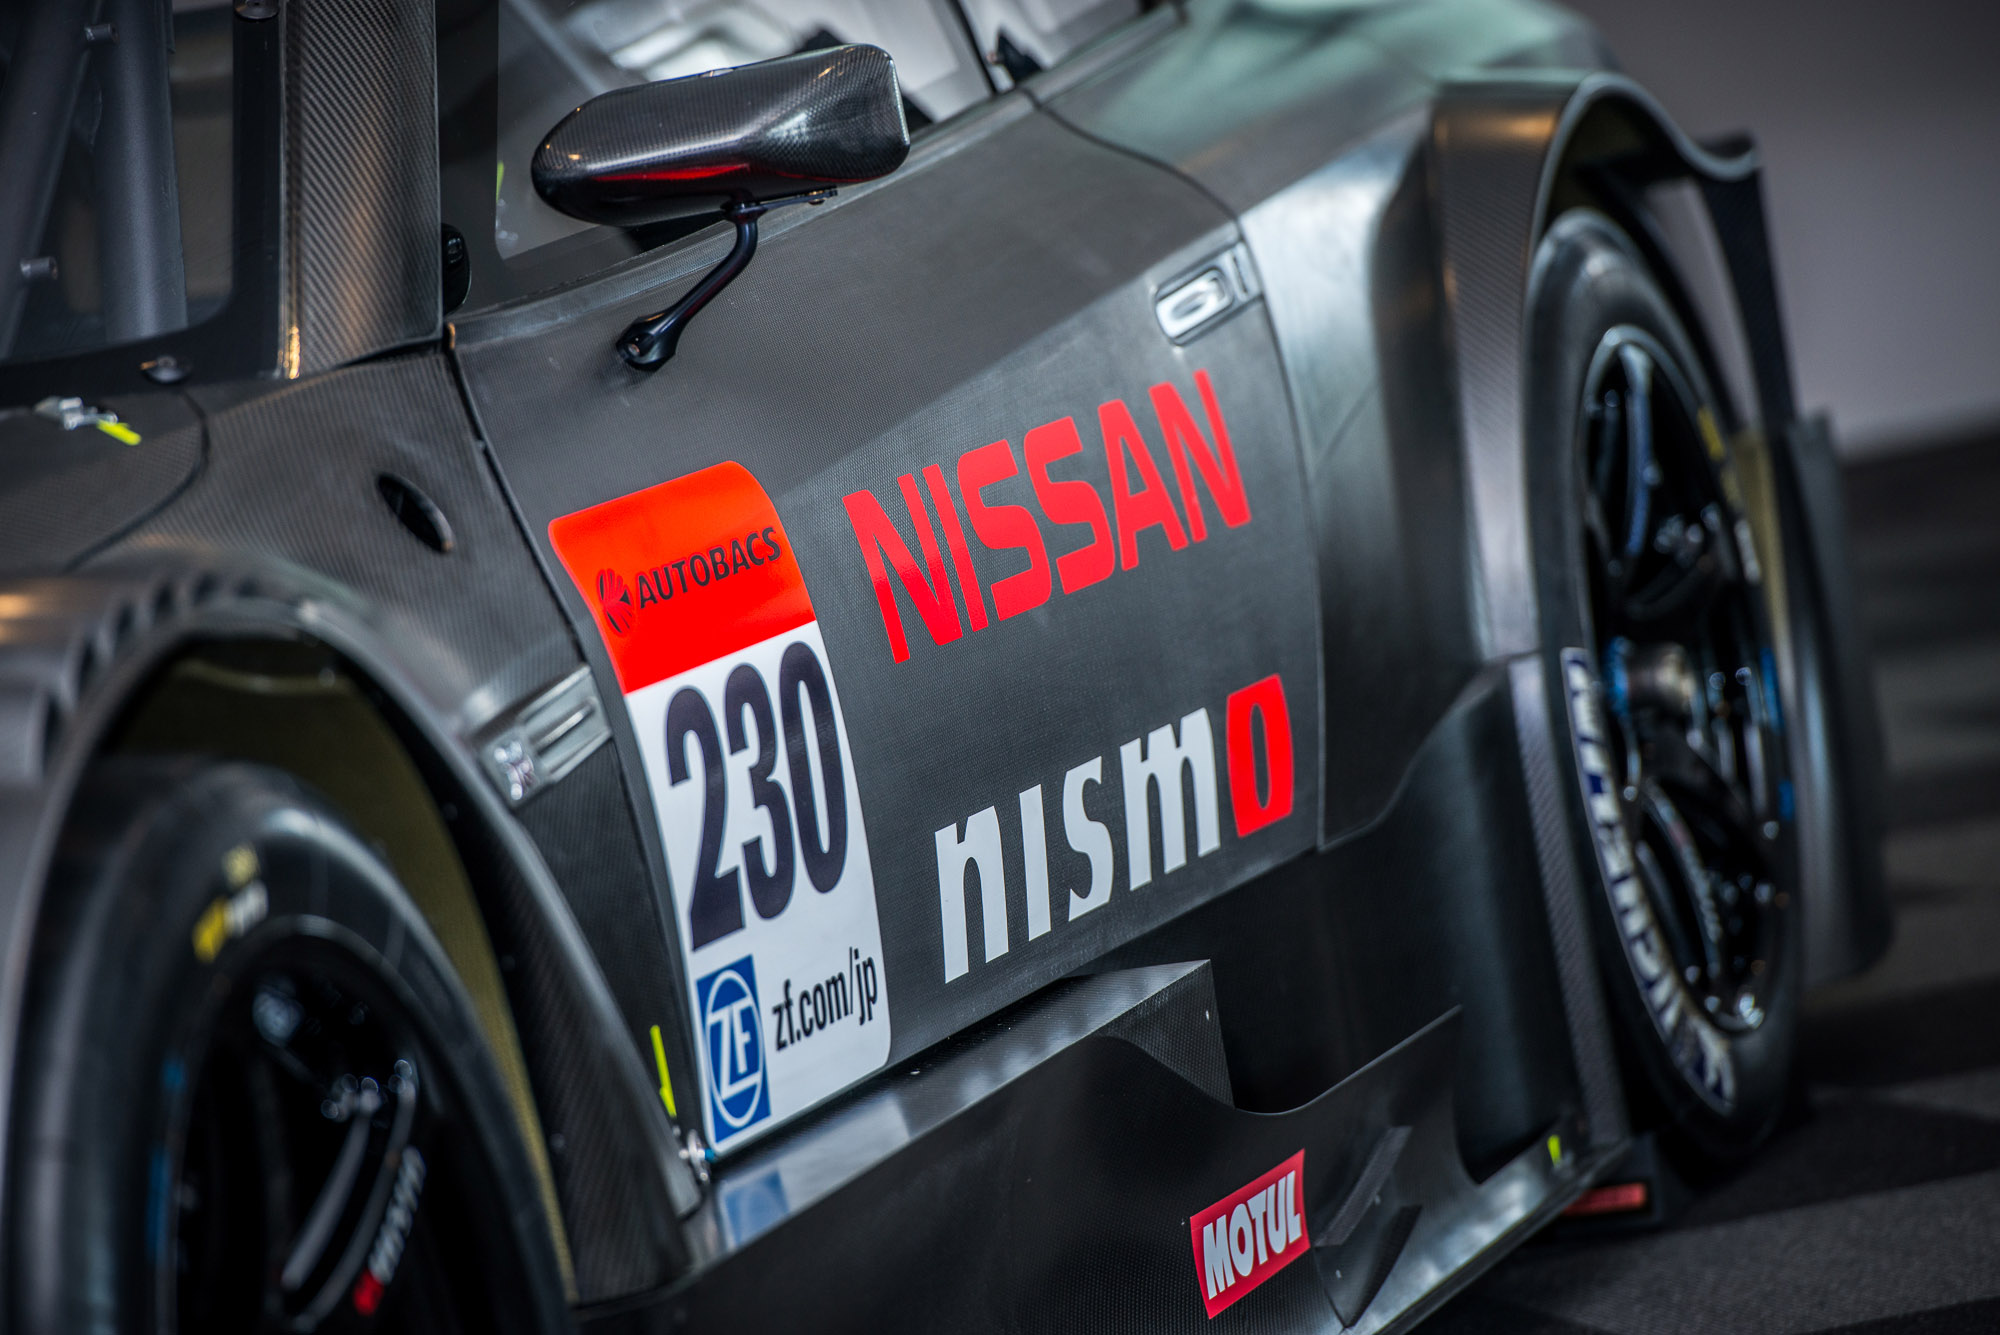 Nissan GT-R NISMO GT500